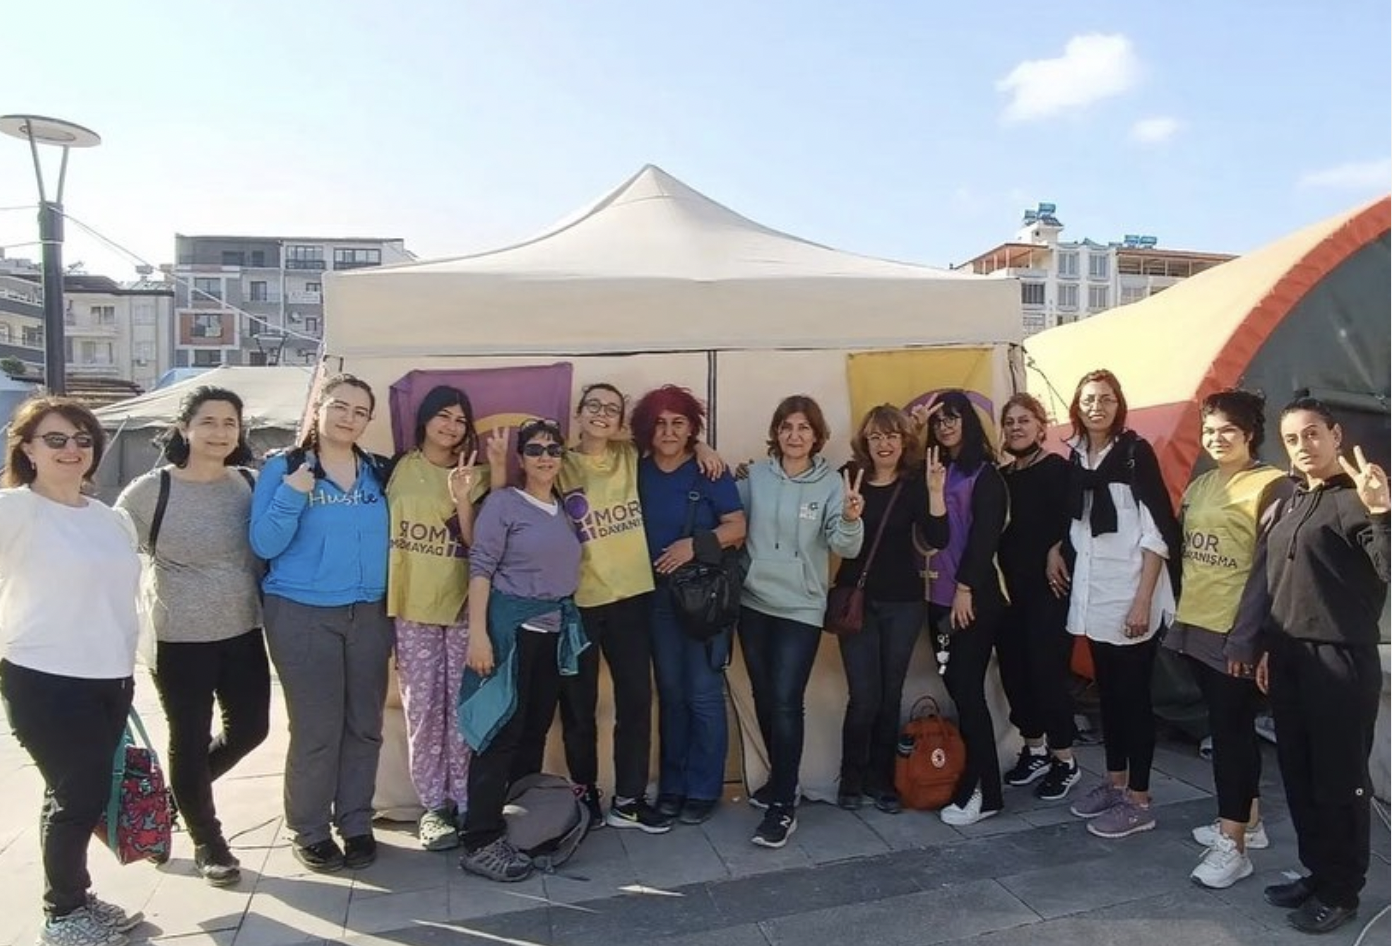 Women in front of the solidarity tent.